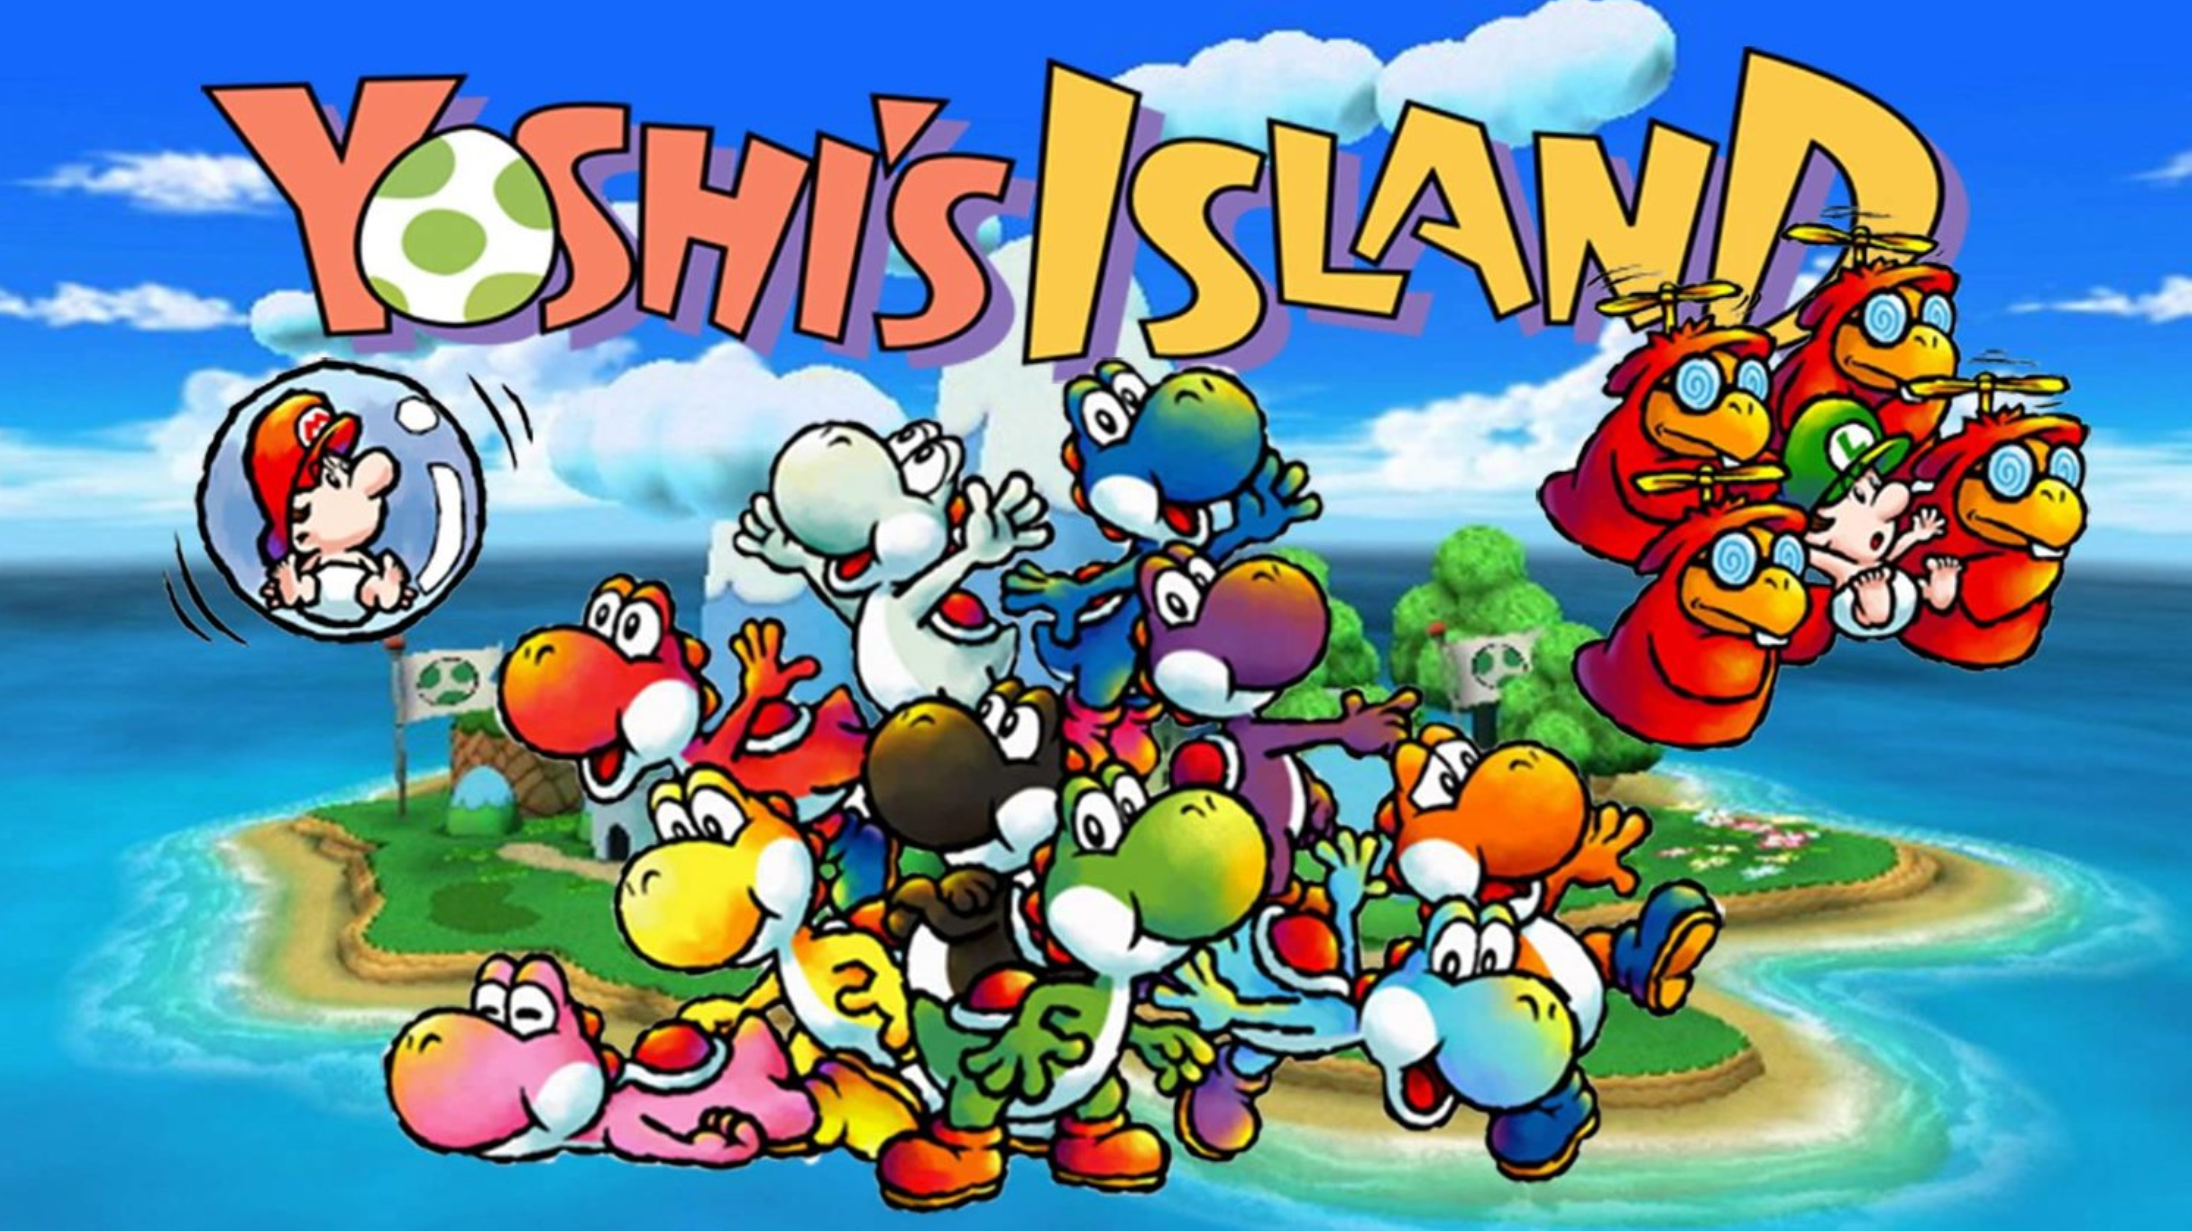 Yoshi s world. Super Mario World 2 Yoshi's Island. Super Mario World 2 Yoshis Island. Super Mario World 2 остров Йоши. Super Mario World 2 - Yoshi's Island Snes.